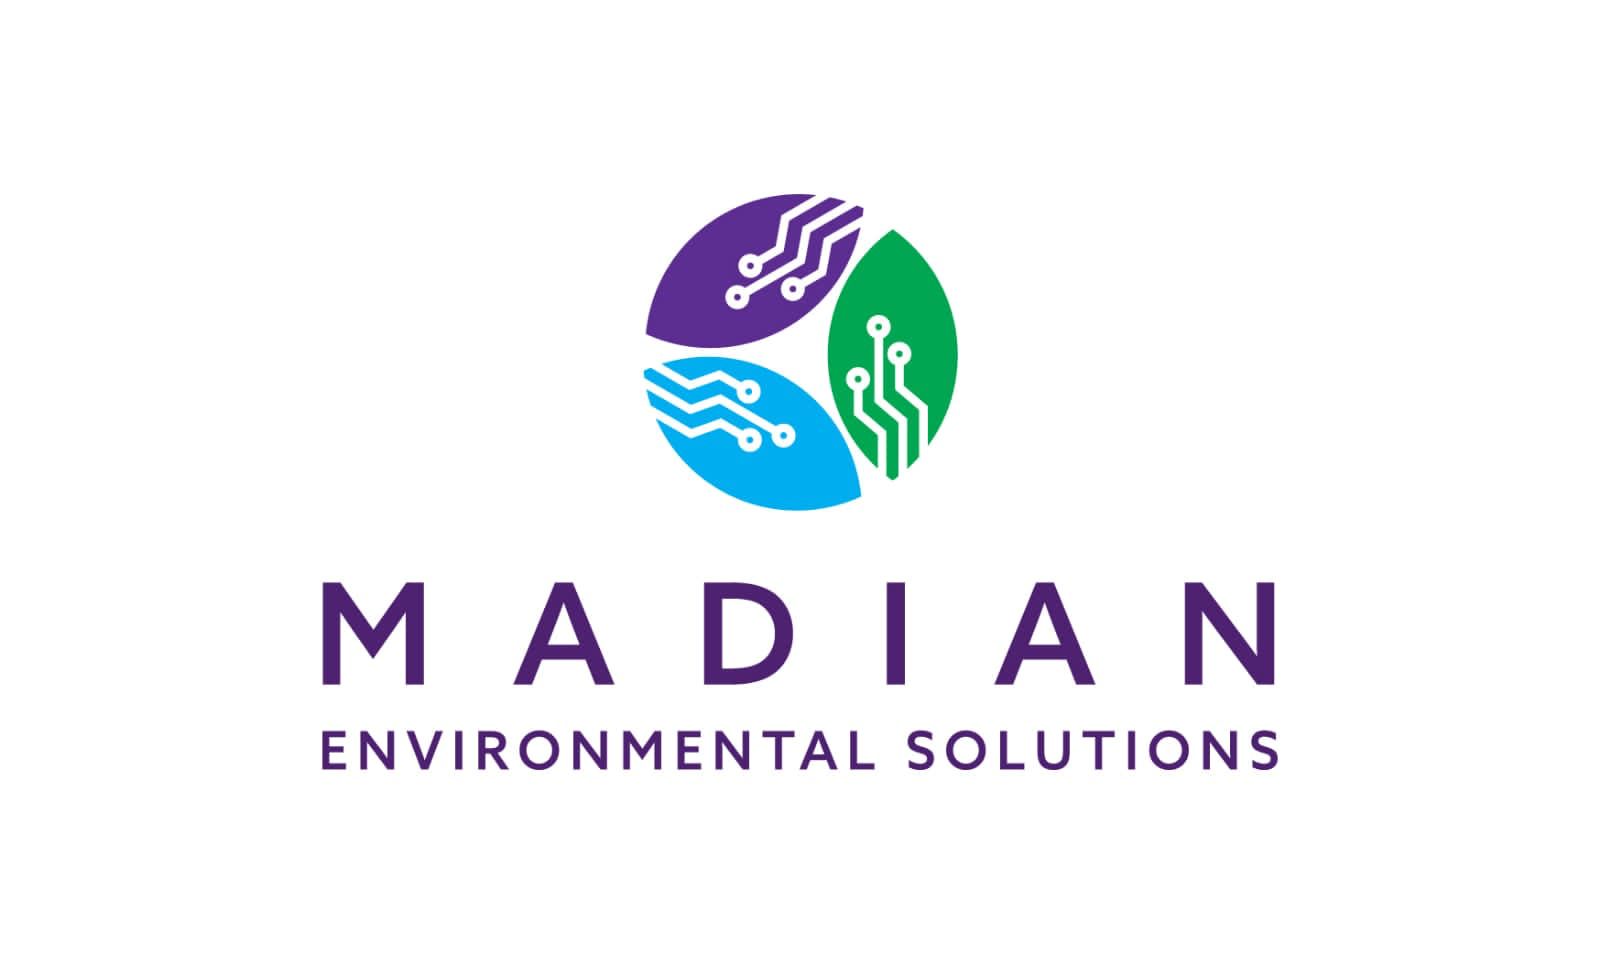 Madian Environmental Solutions